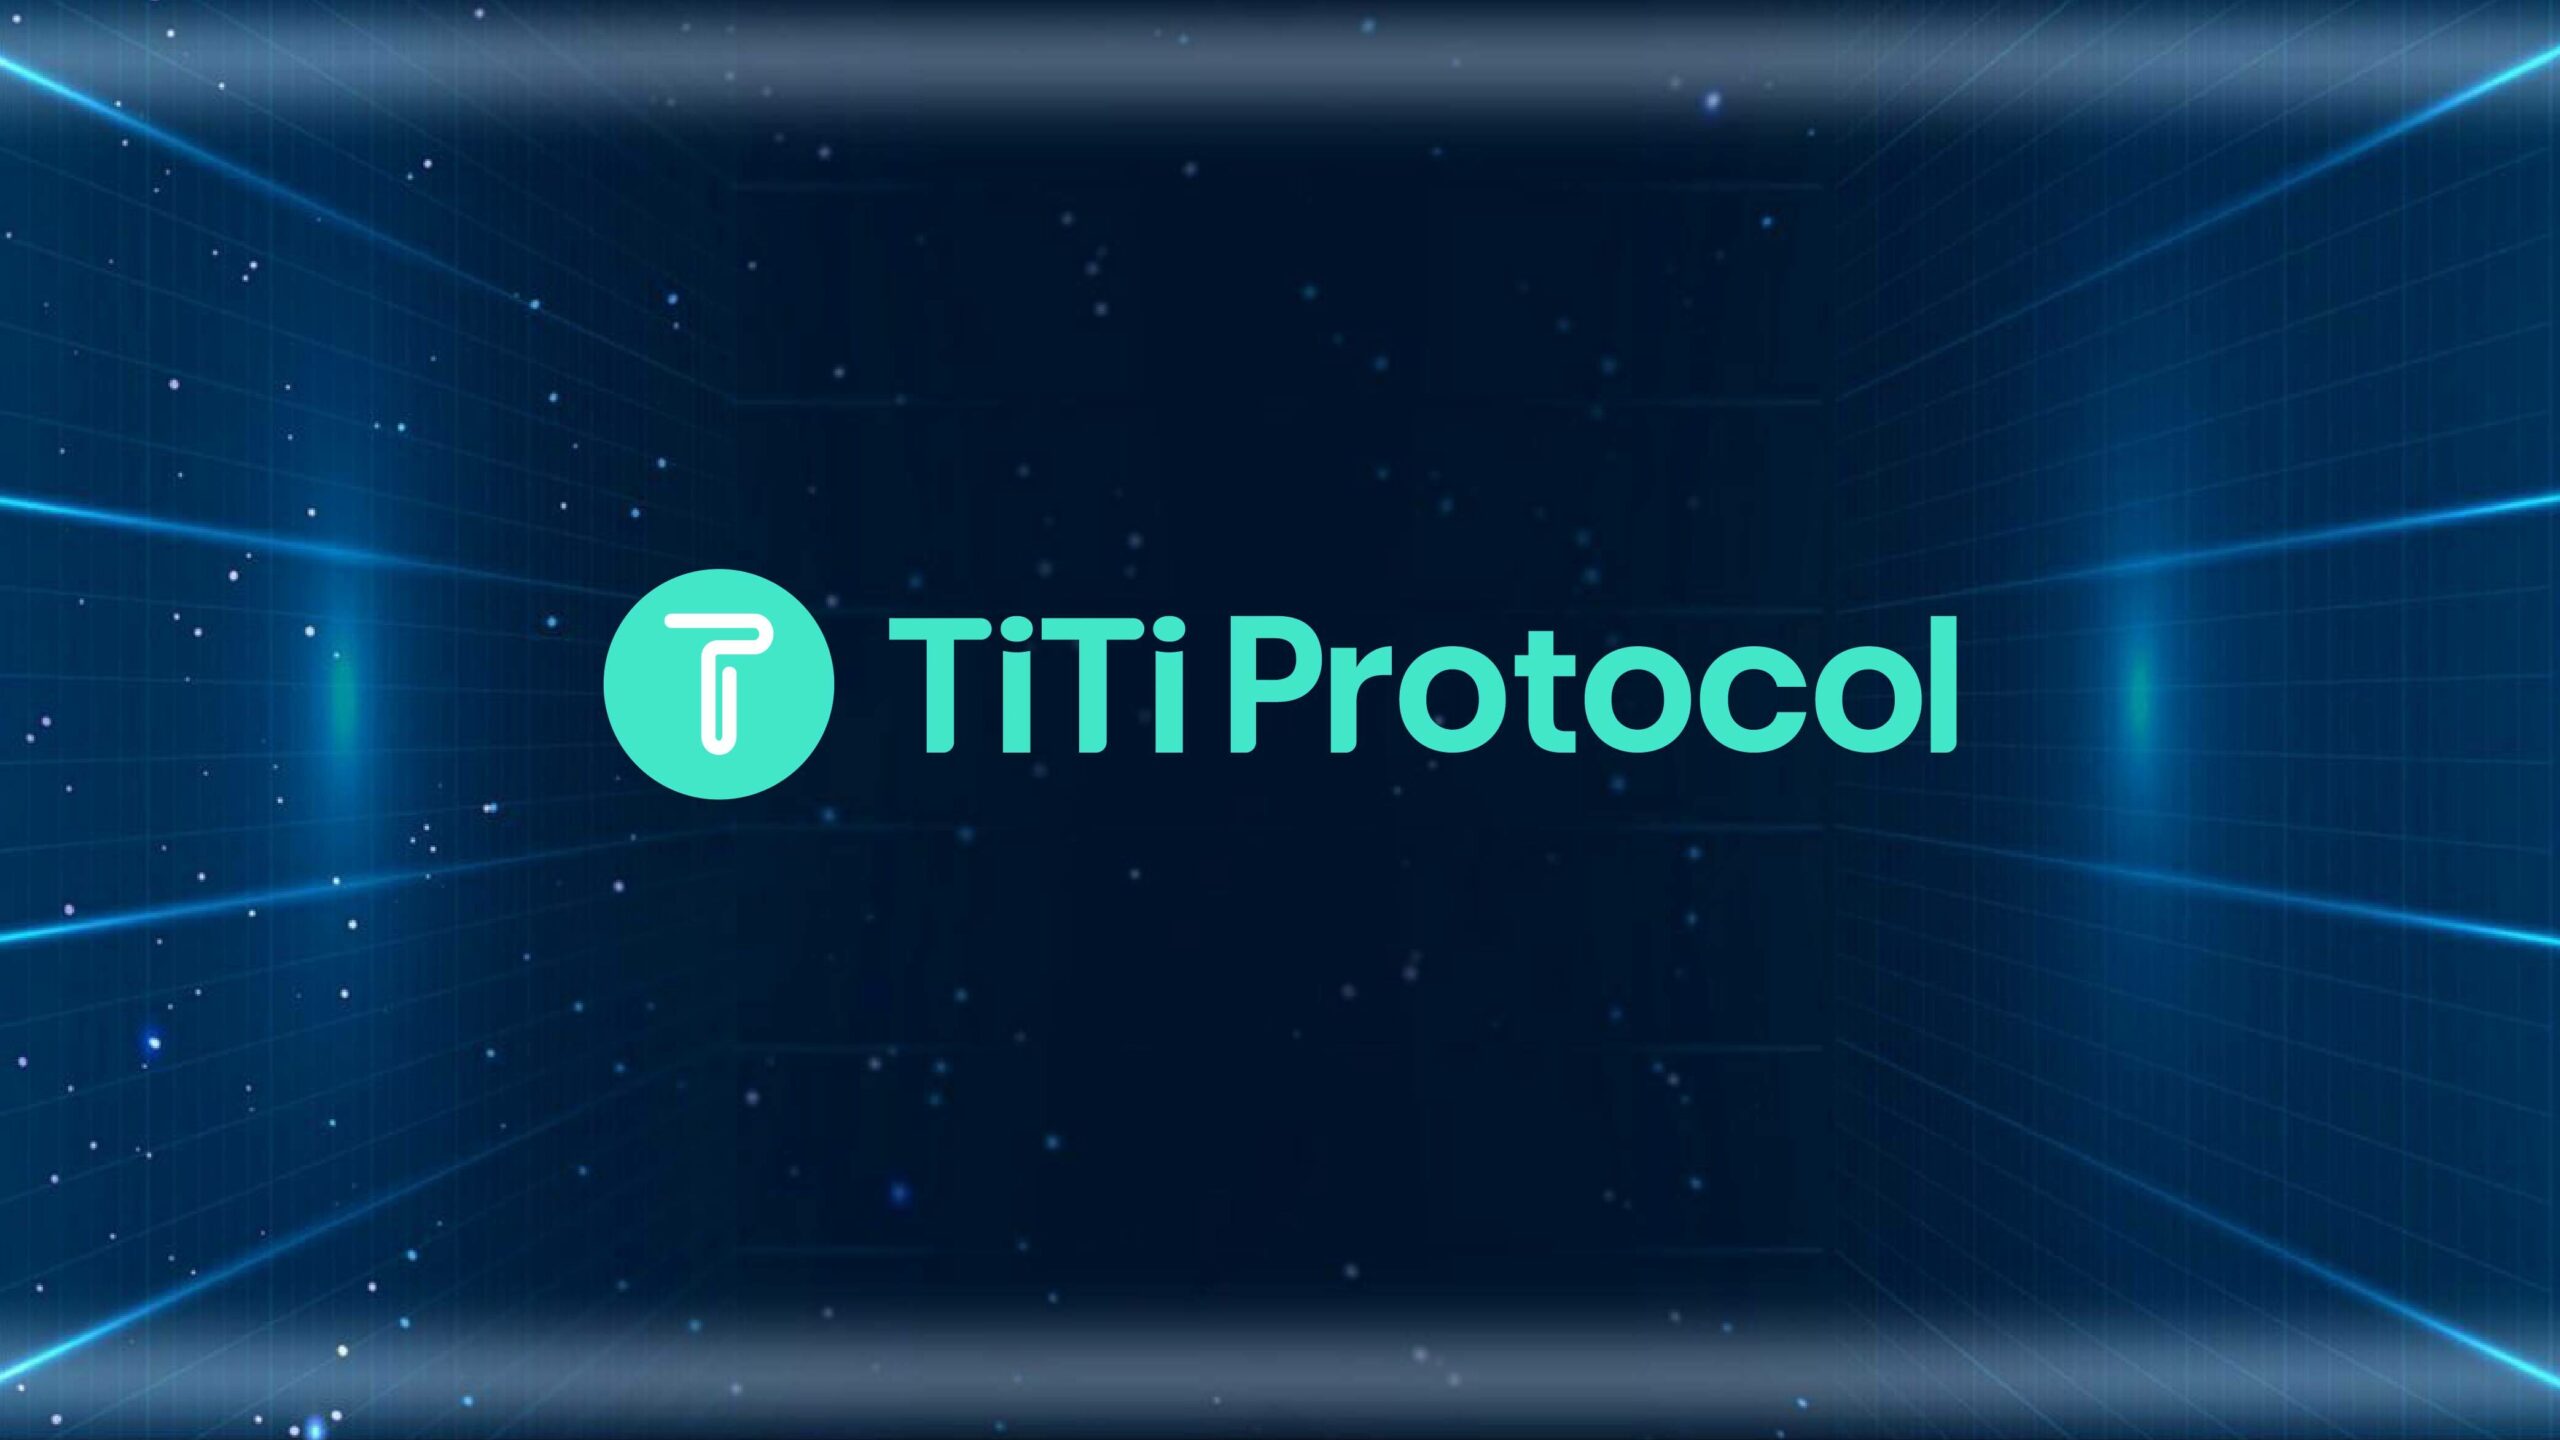 Titi-protocol-has-announceed-it-will-launch-zksync-era-mainnet-on-june-28th